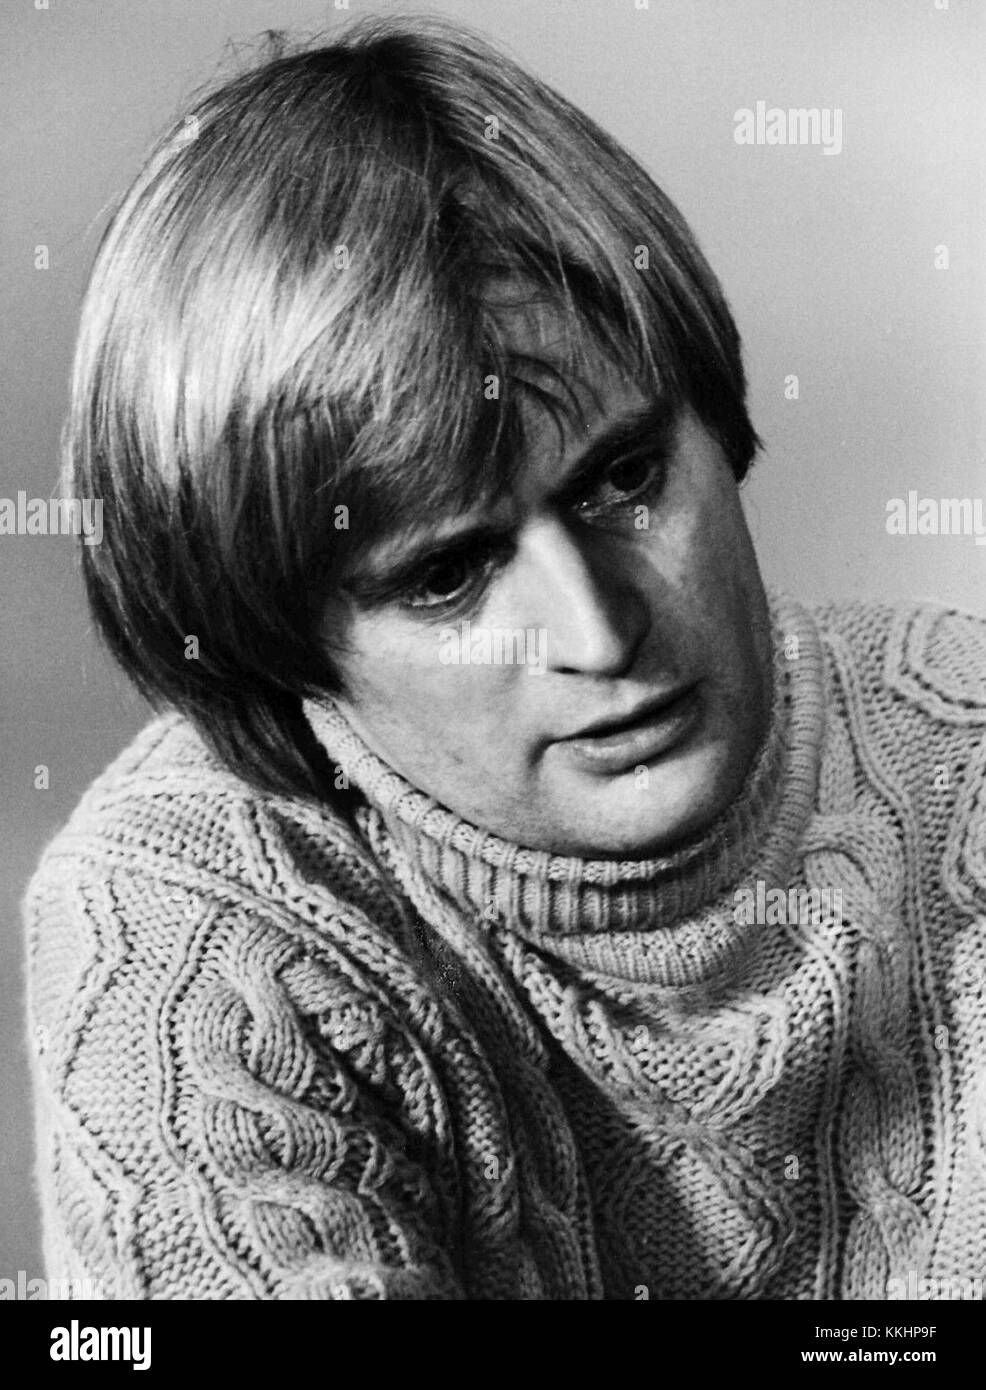 David McCallum 1975 Stock Photo